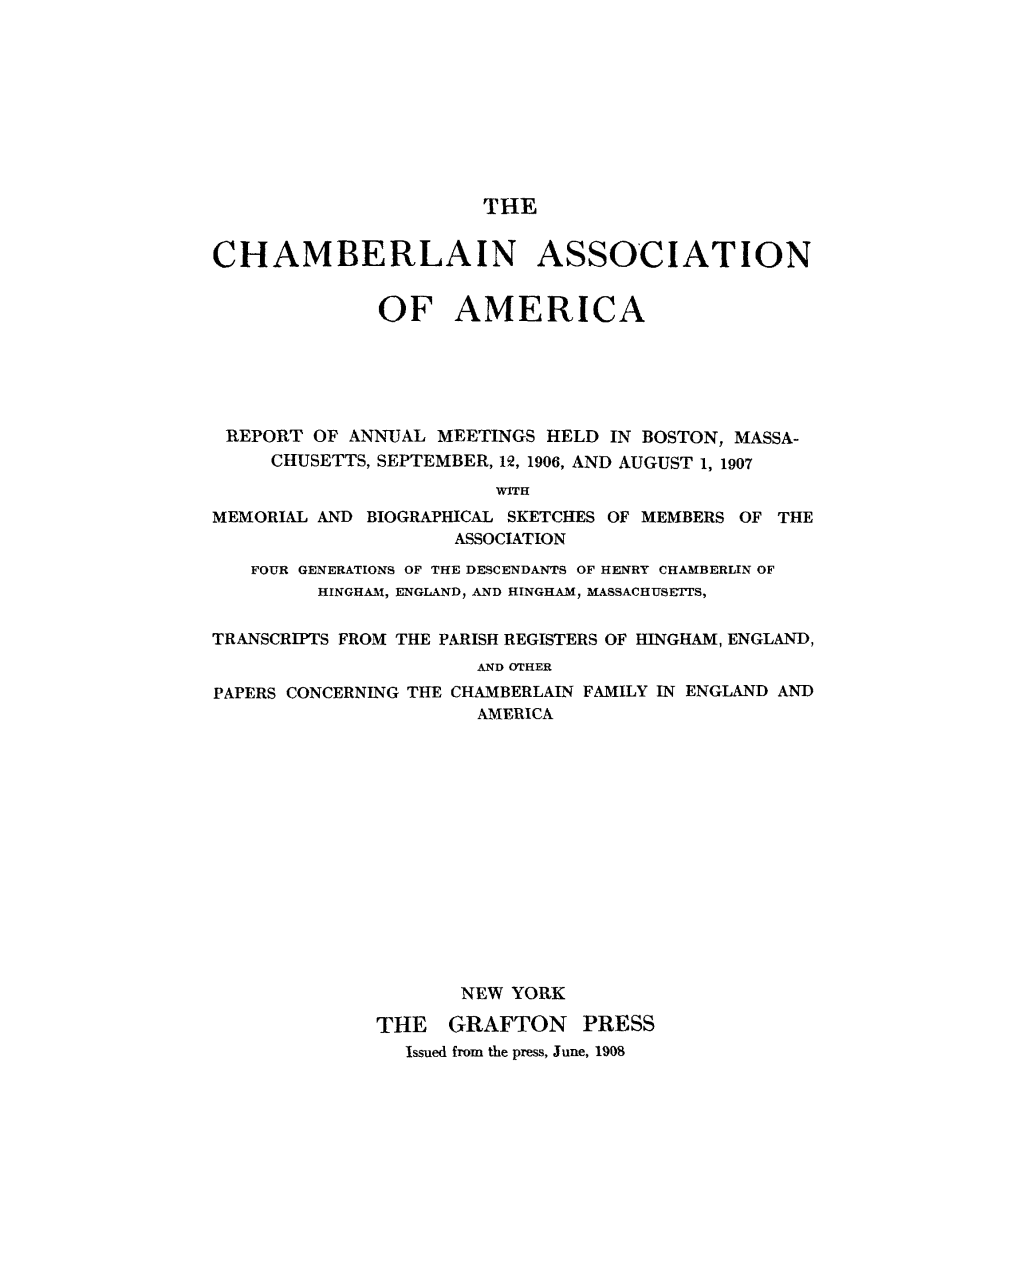 CHAMBERLAIN Asso·C1ation of AMERICA